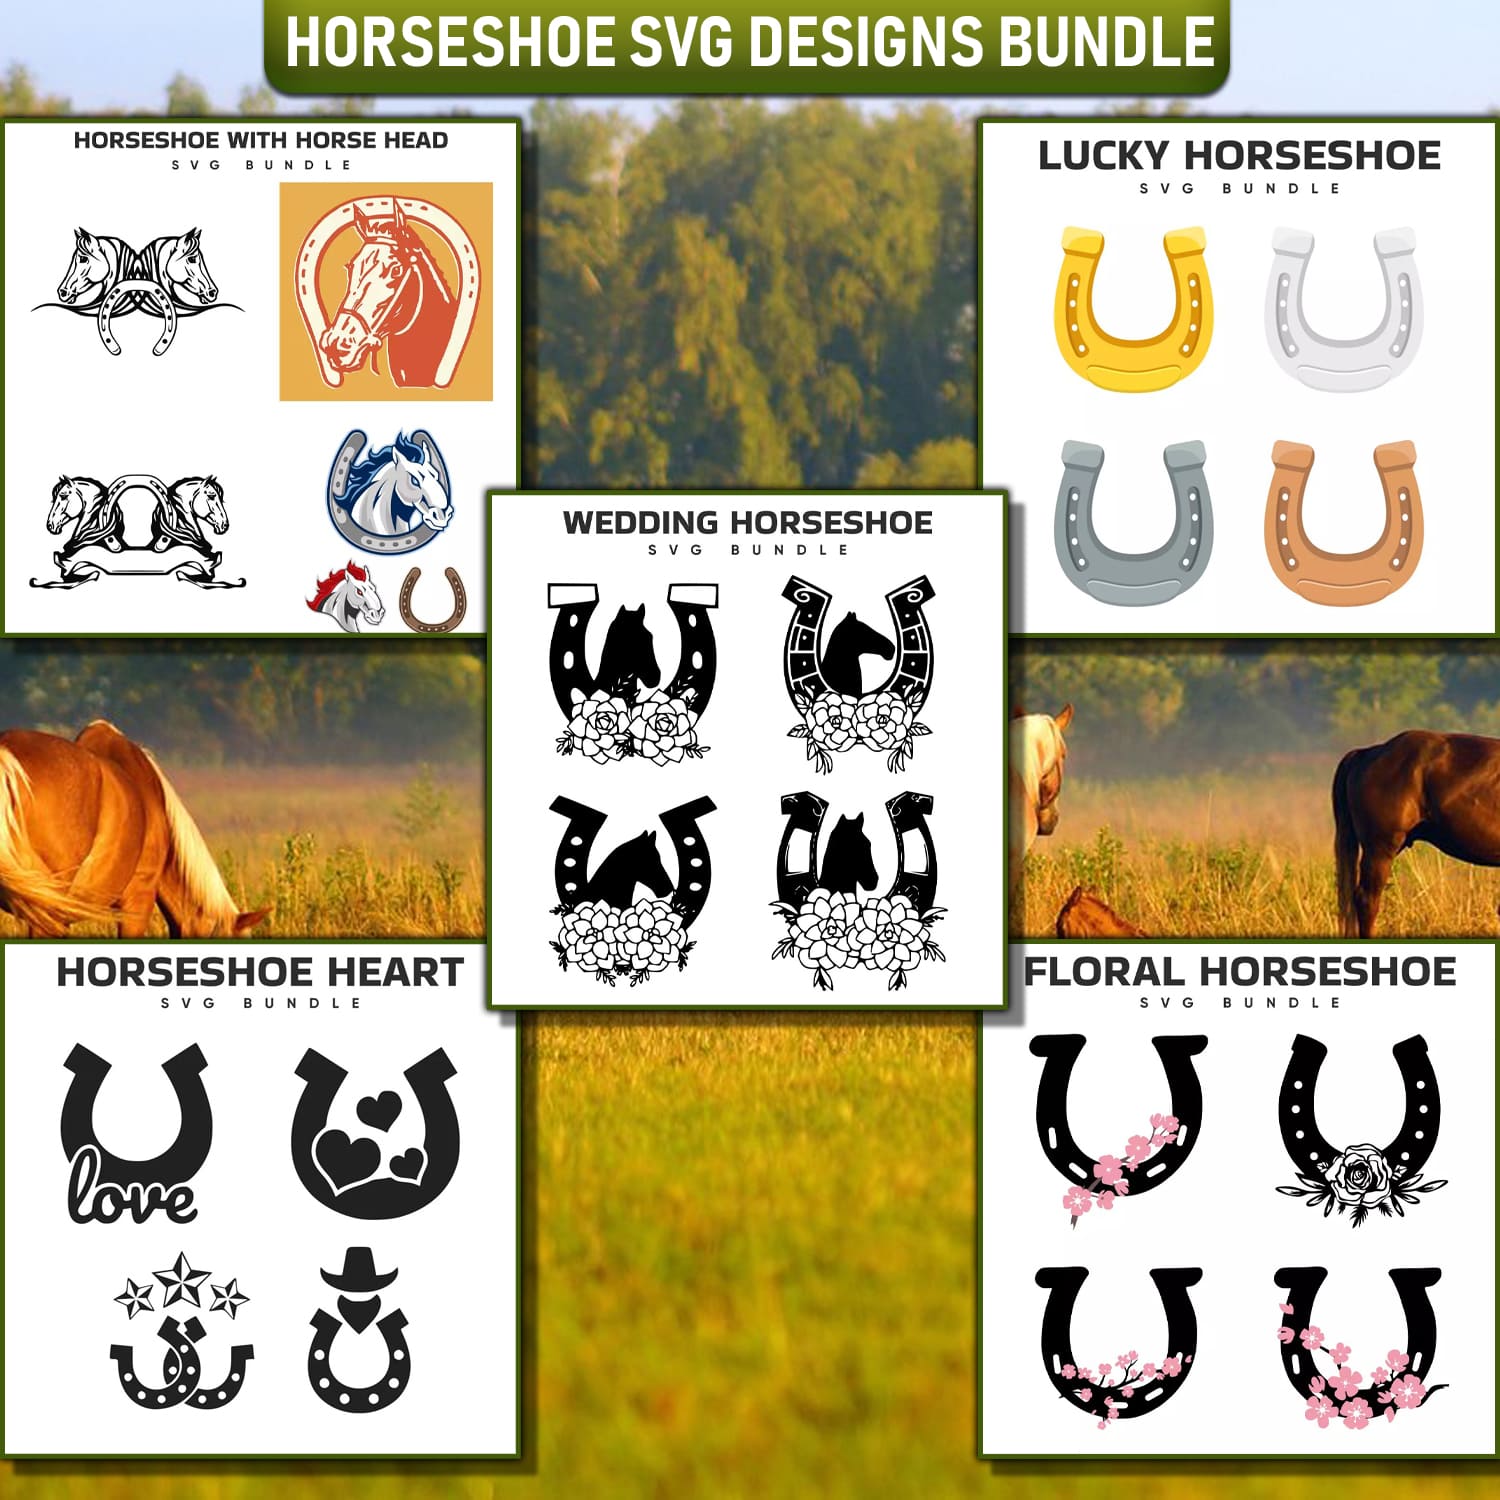 Horse shoe designs bundle.